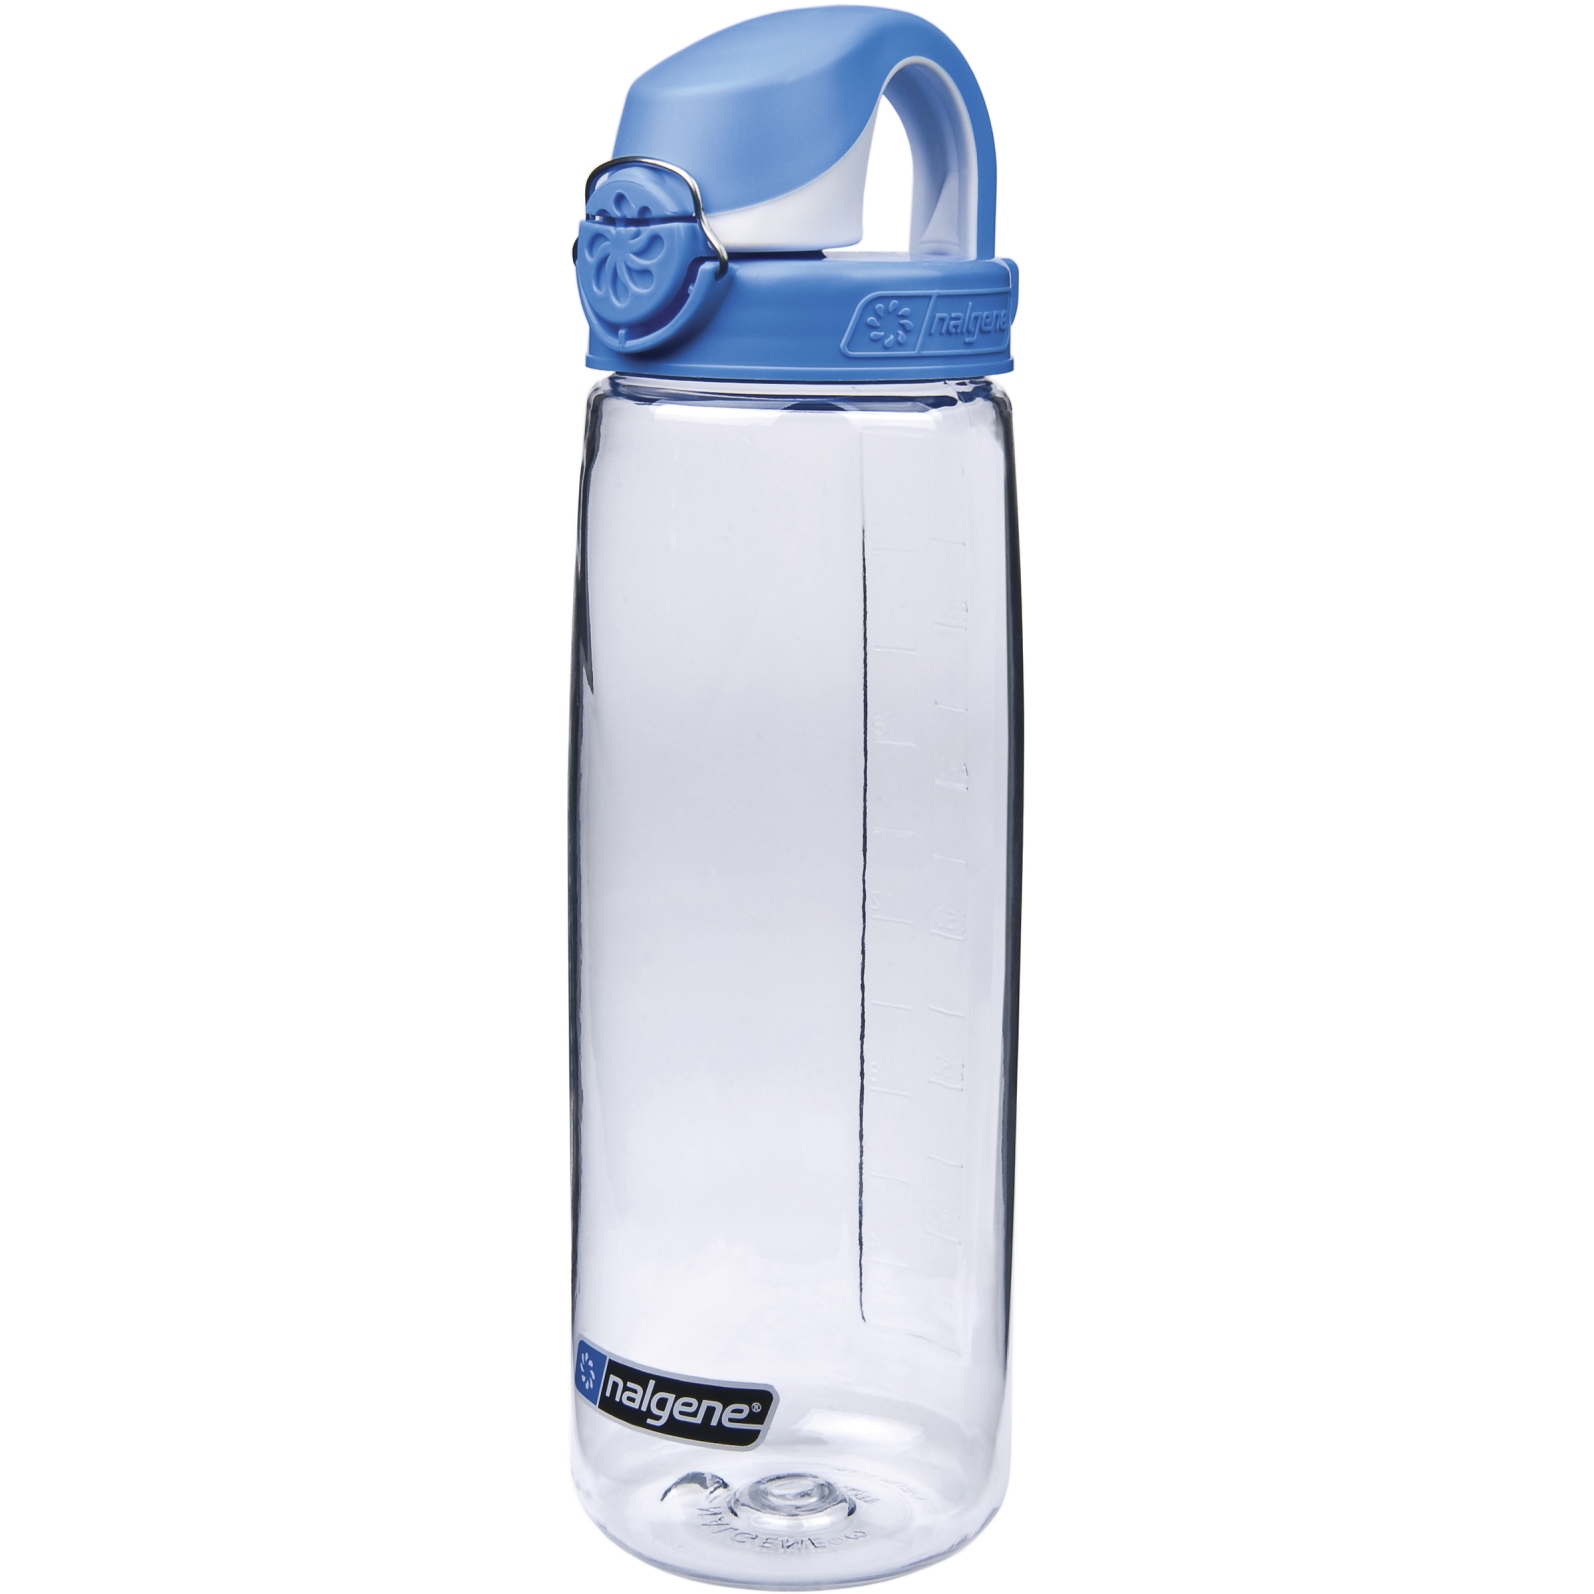 Productfoto van Nalgene OTF Drinkfles - 0.65l - transparent/blue